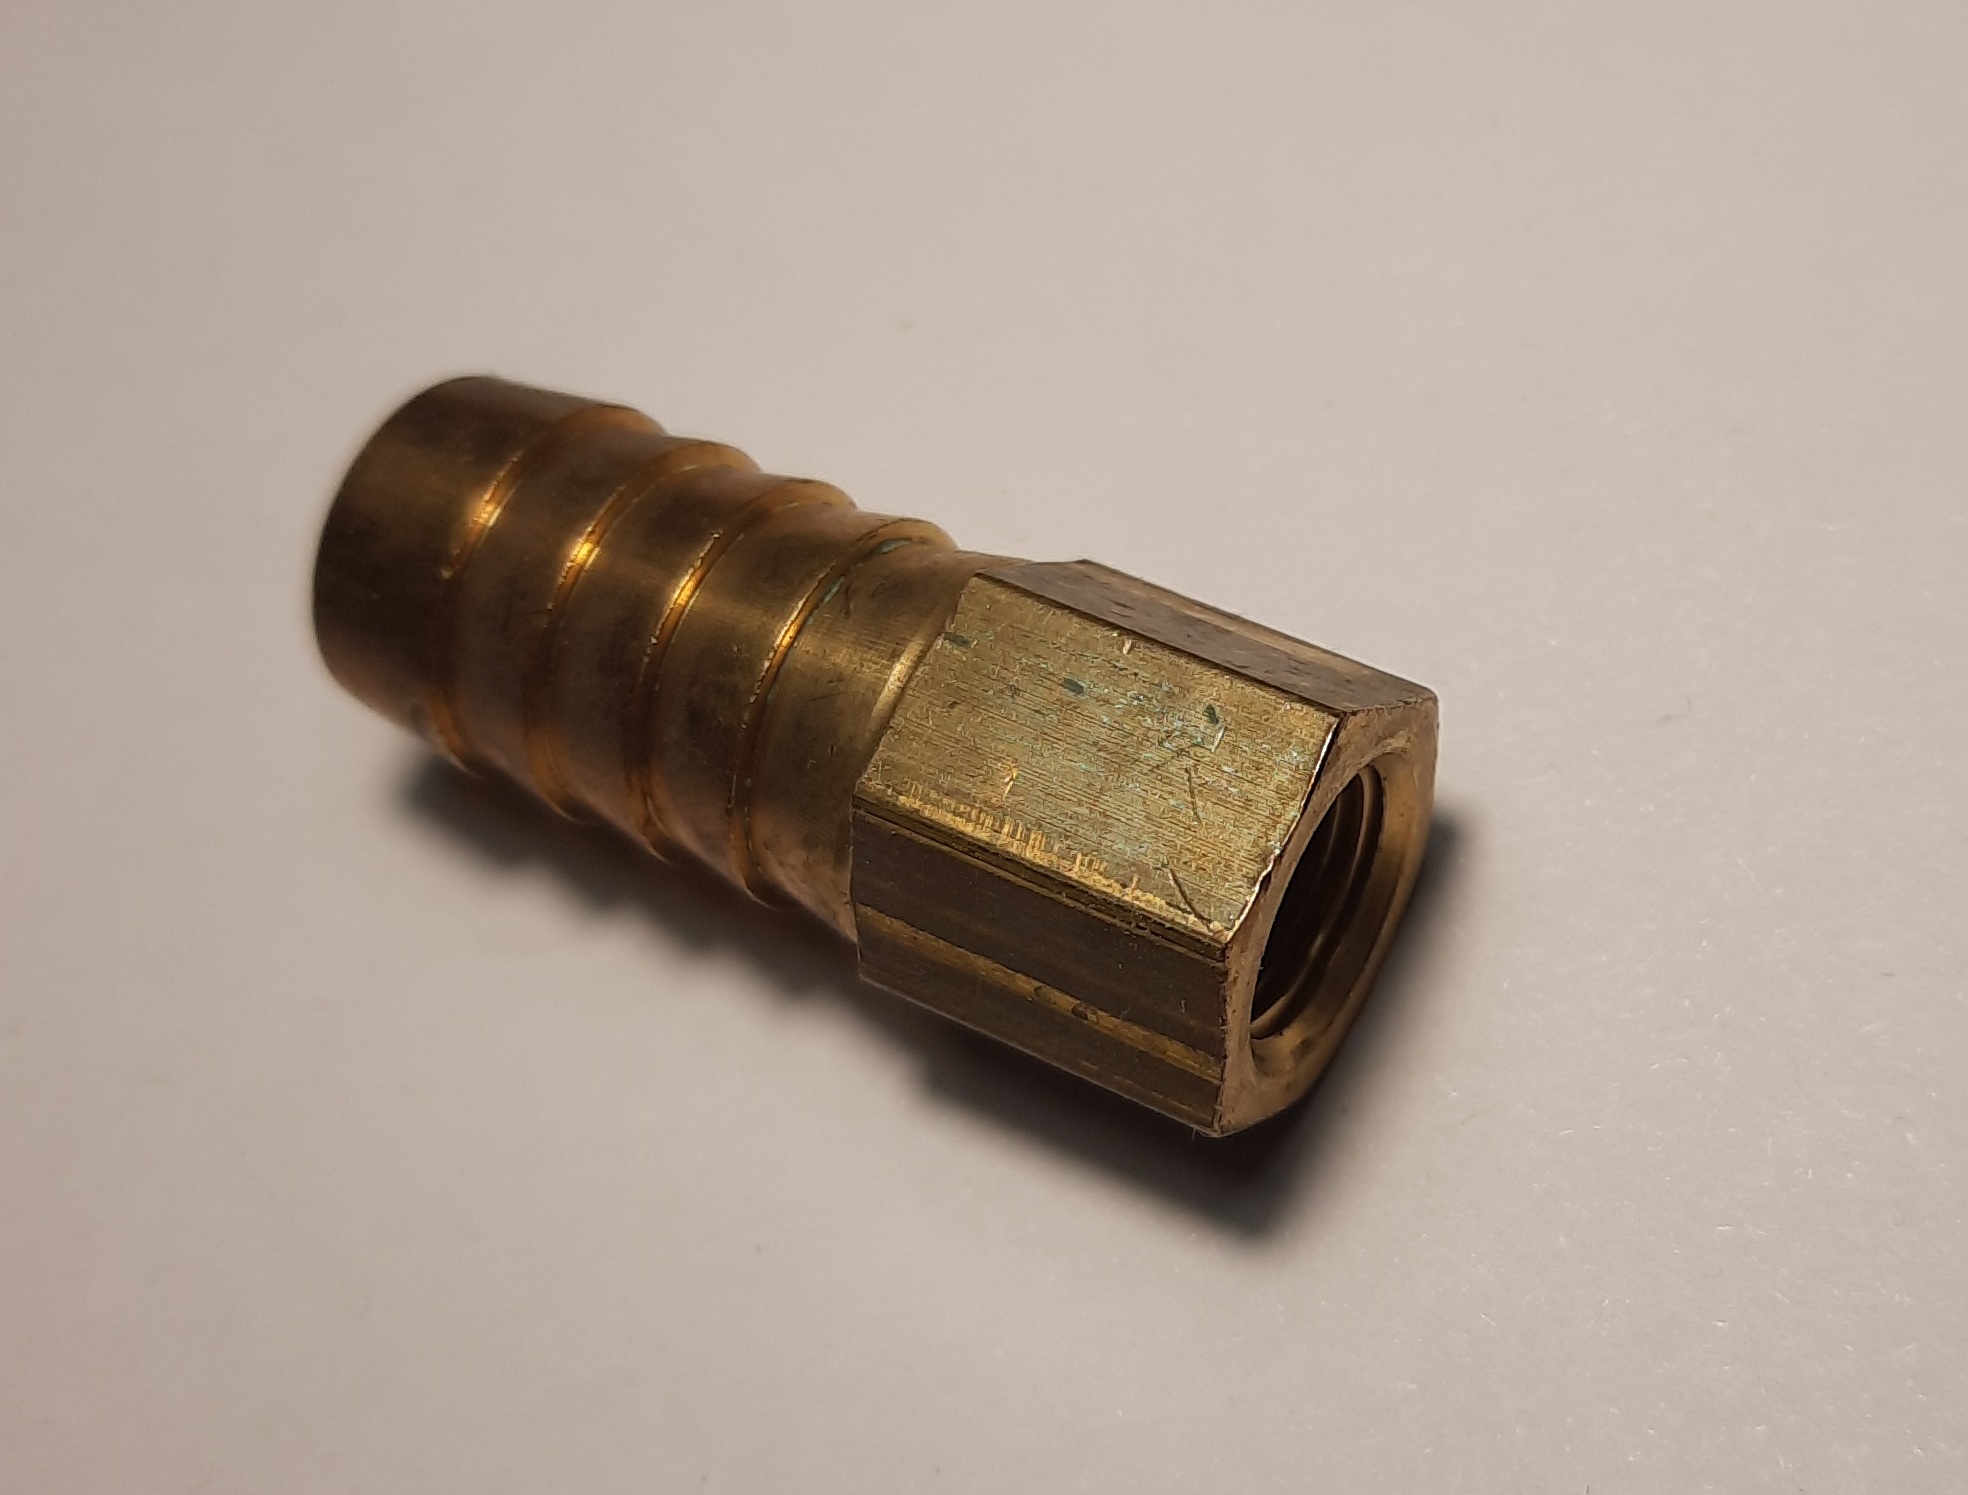 Штуцер из латуни, резьба: внутренняя G1/8, диаметр трубки штуцера 14 мм заглушка с конденсатоотводом прок внутренняя диаметр 130 пр029907